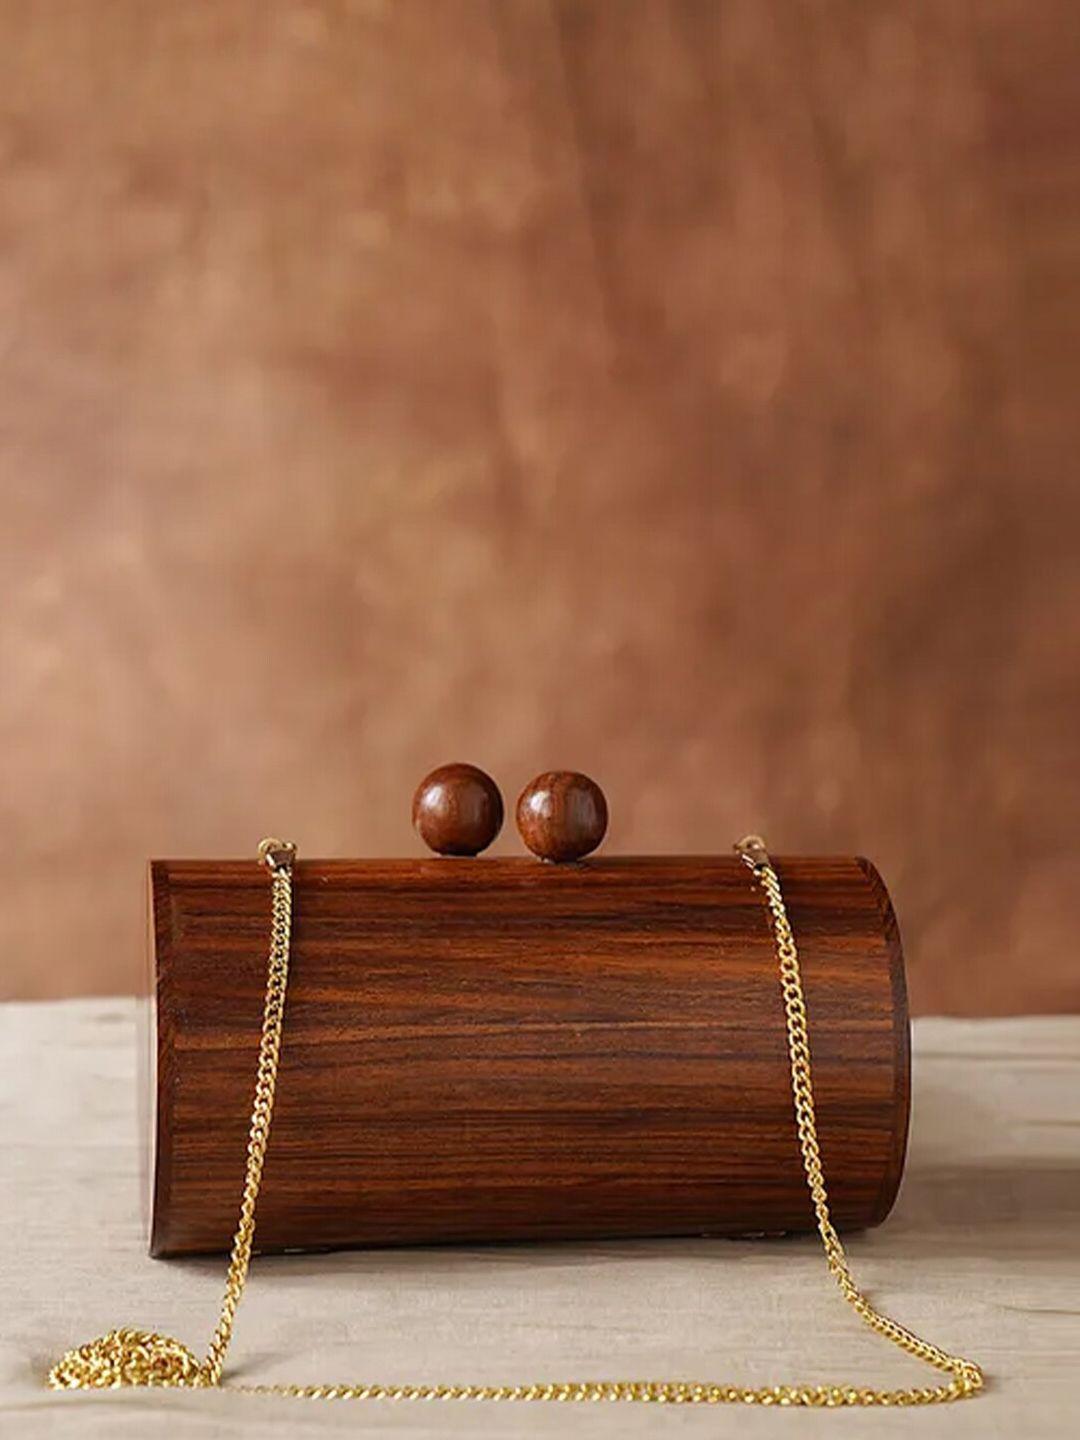 jalwa art wooden box clutch with shoulder strap